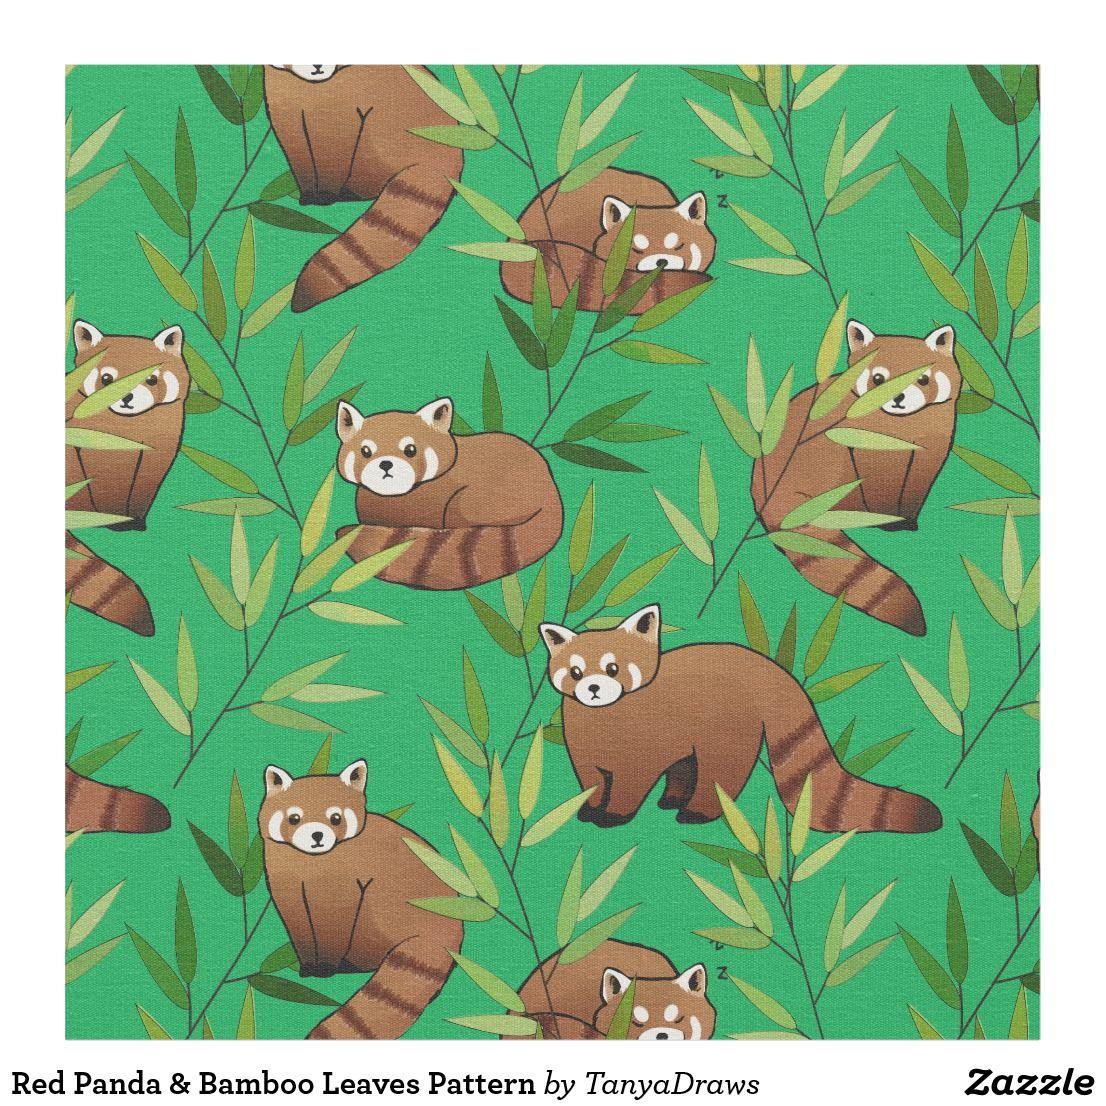 Red Panda & Bamboo Leaves Pattern Fabric. Red panda, Panda